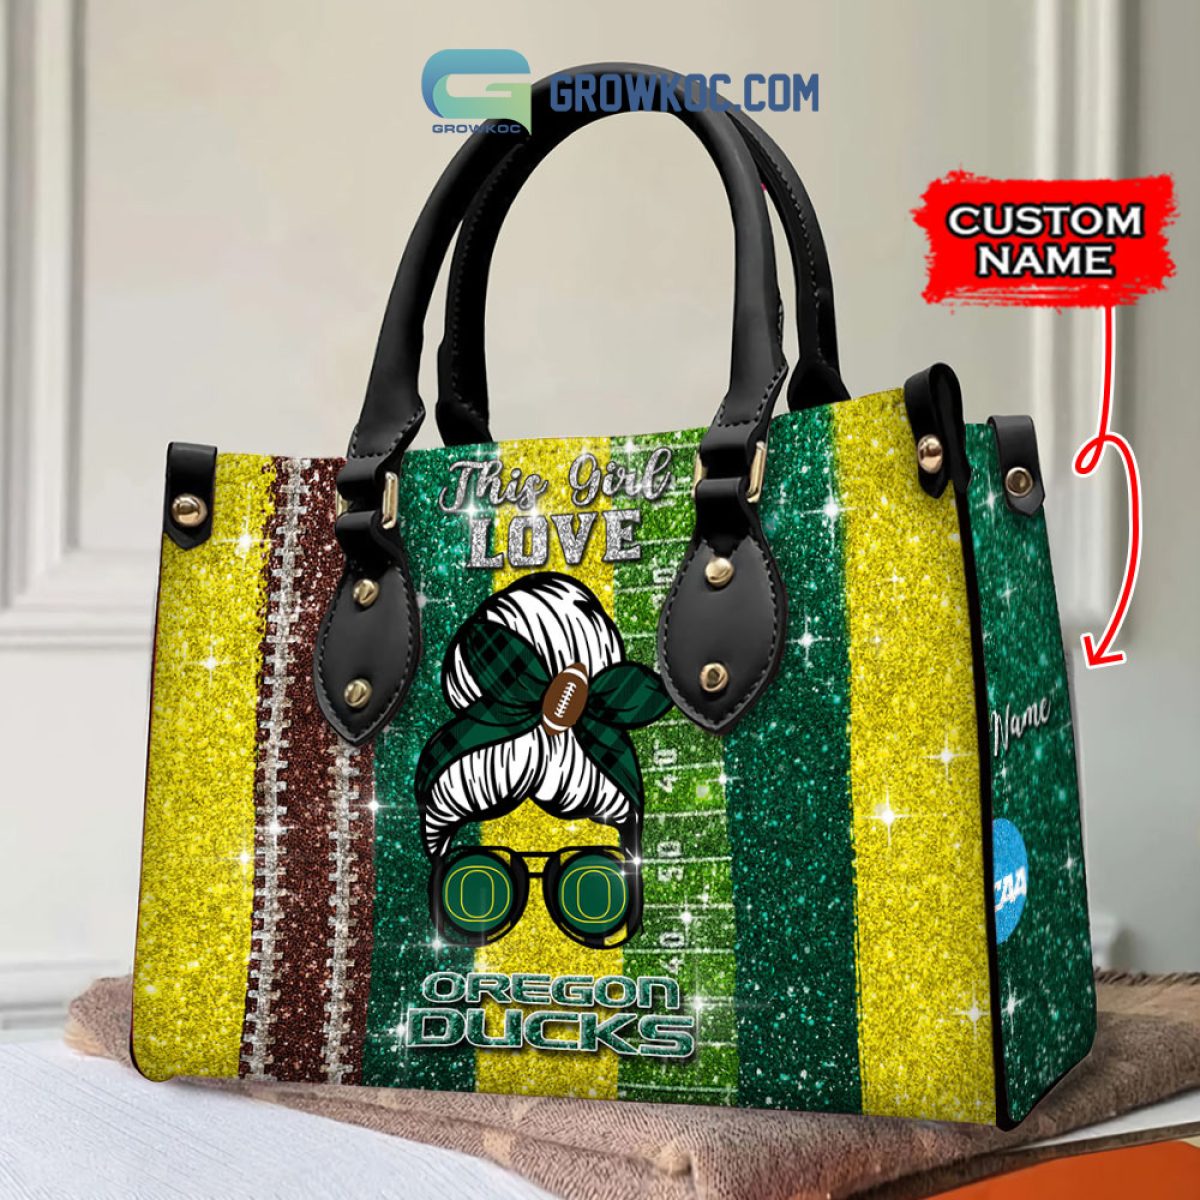 Pauls Boutique Sling Bag, Women's Fashion, Bags & Wallets